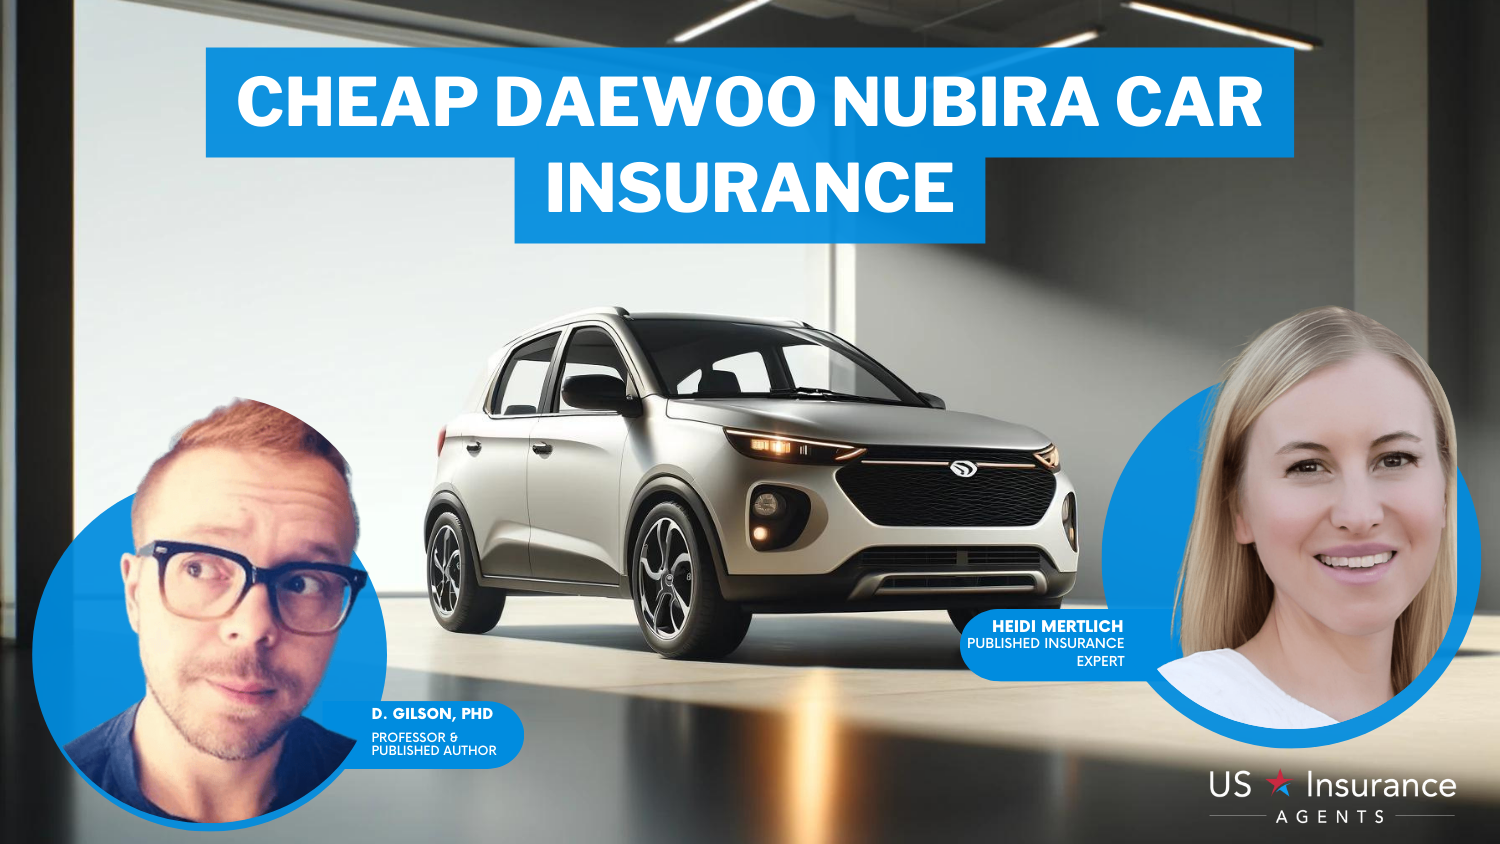 Cheap Daewoo Nubira Car Insurance: USAA, Erie, and State Farm